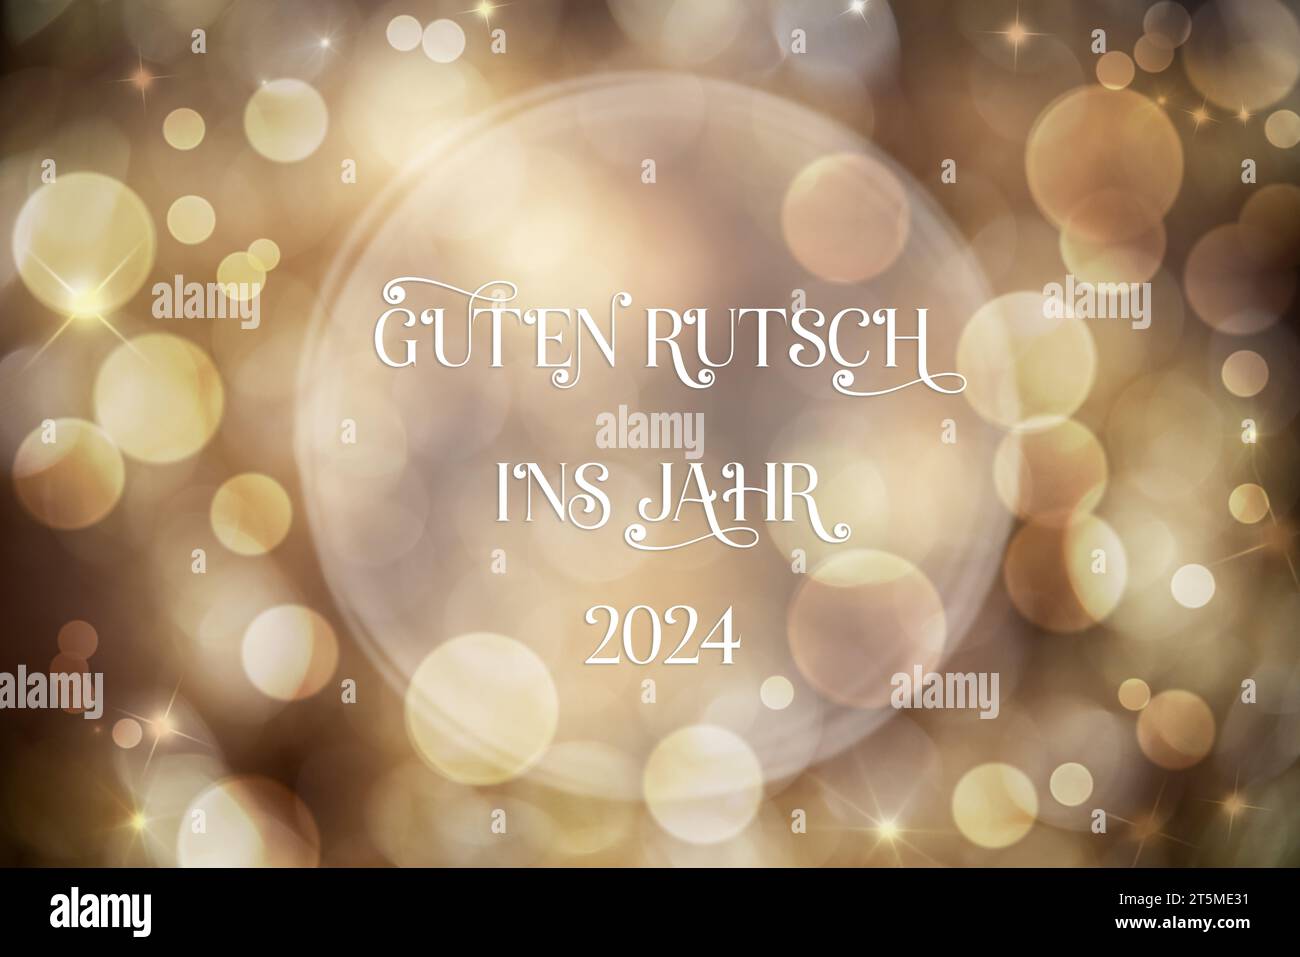 Texte Guten Rutsch 2024, signifie heureux 2024, fond doré de Noël Banque D'Images